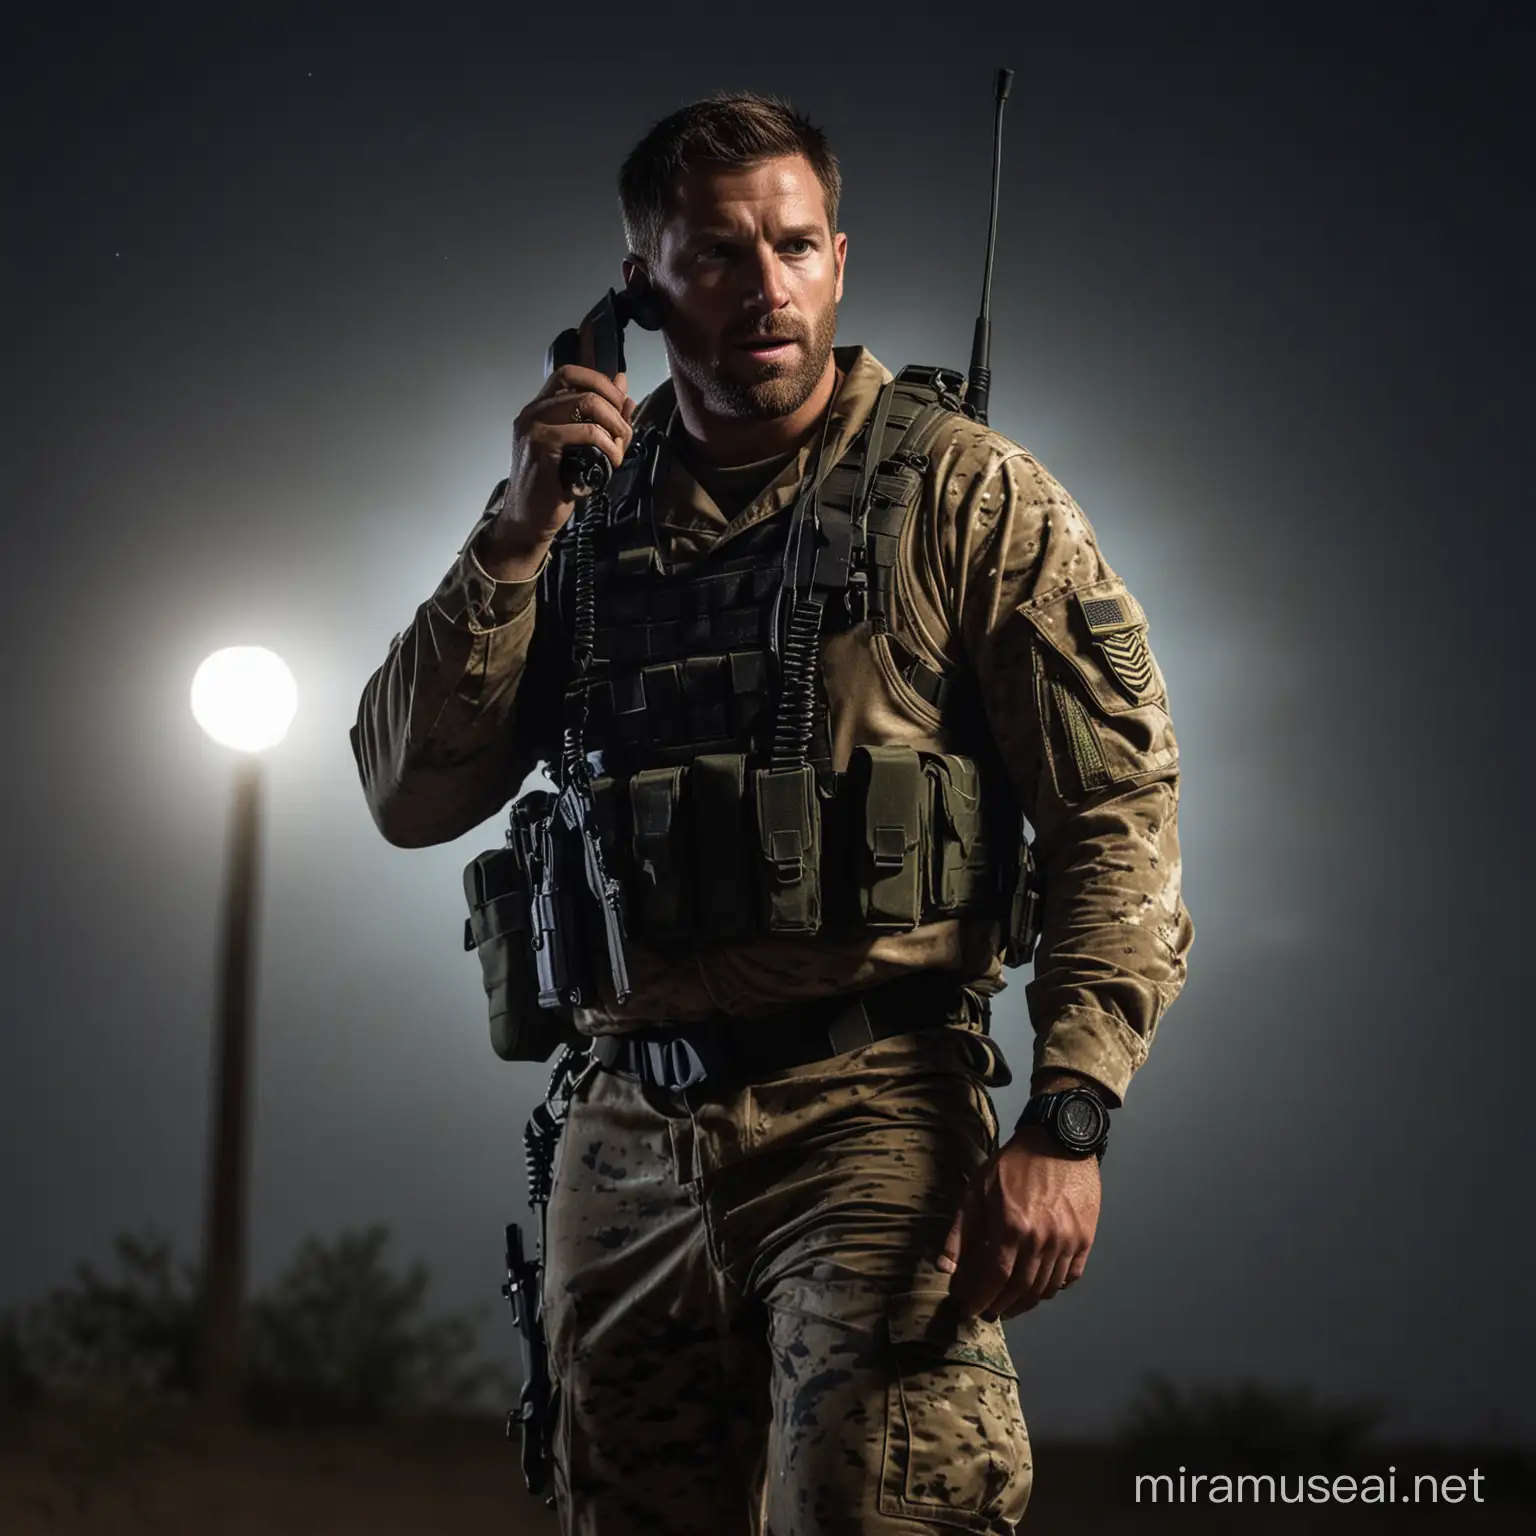 Navy Seal Soldier Communicating on WalkieTalkie in the Night